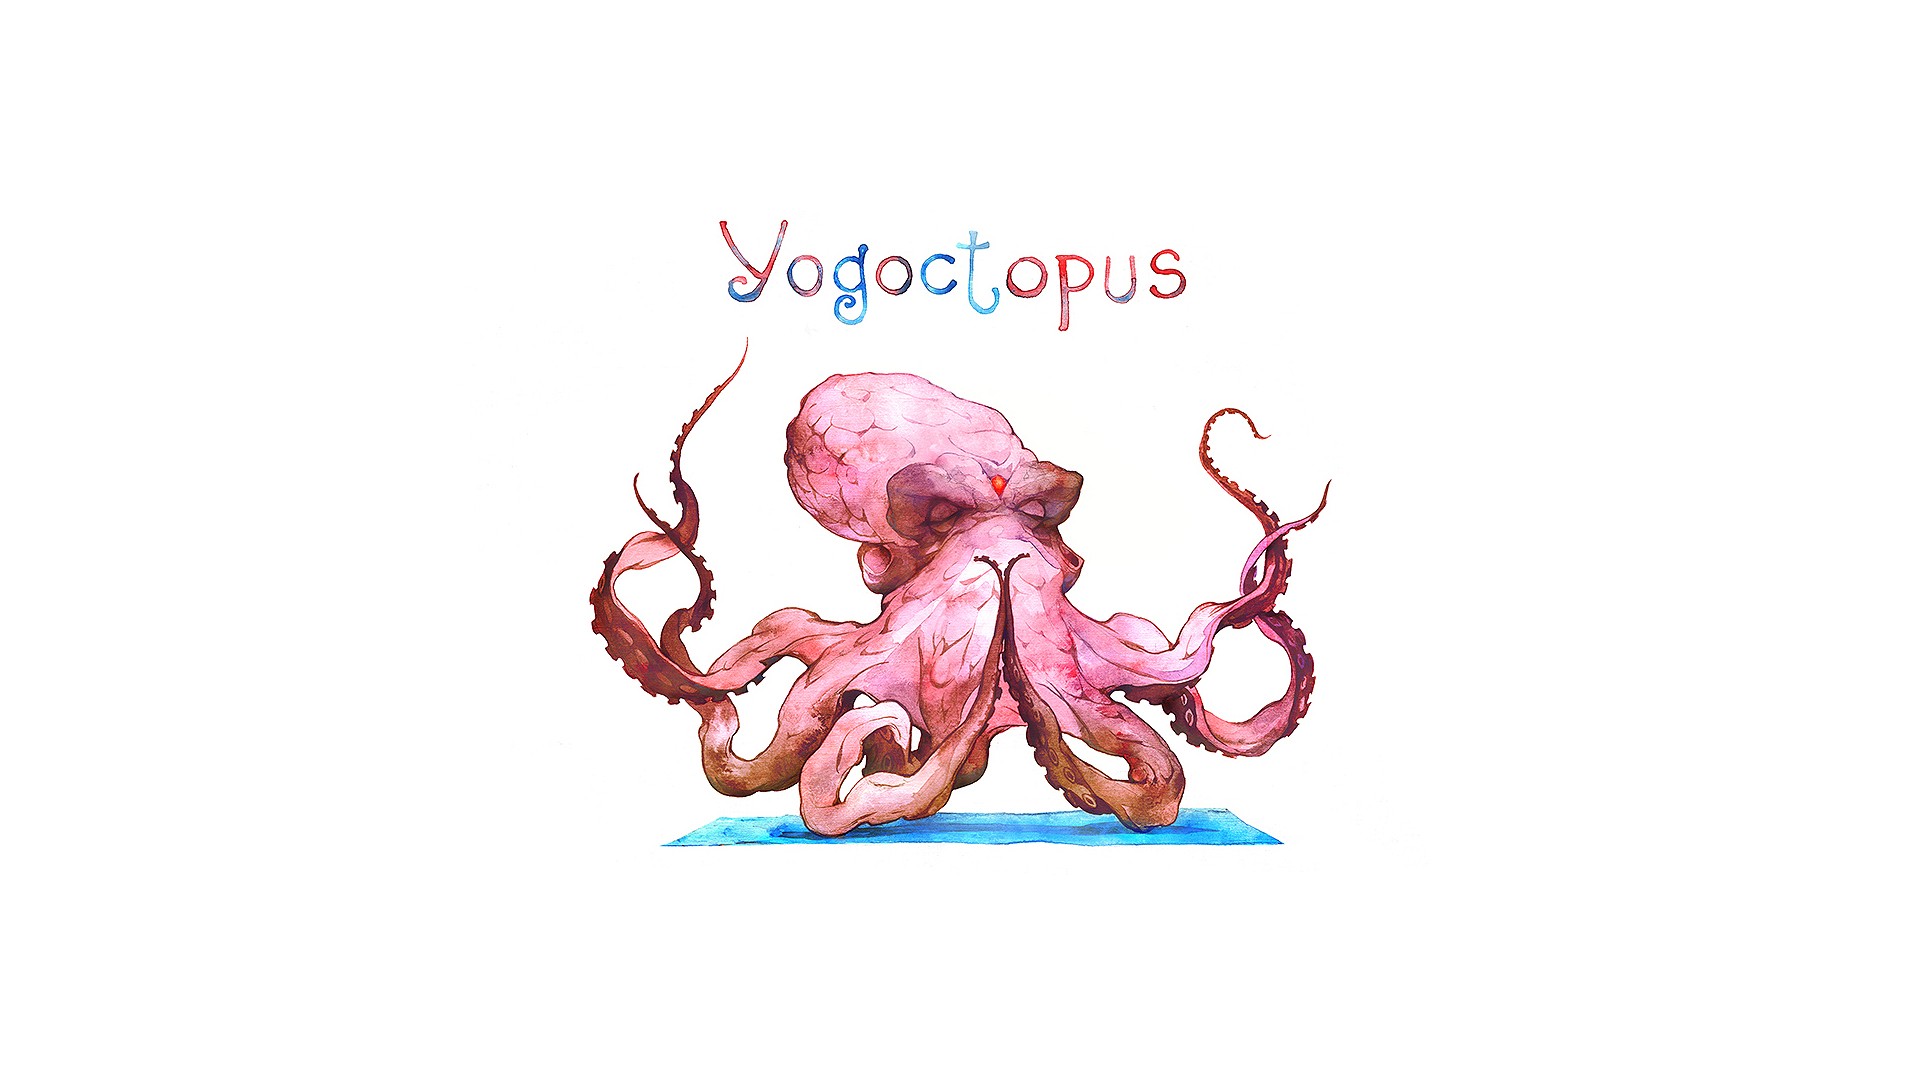 Octopus Yoga Humor 1920x1080